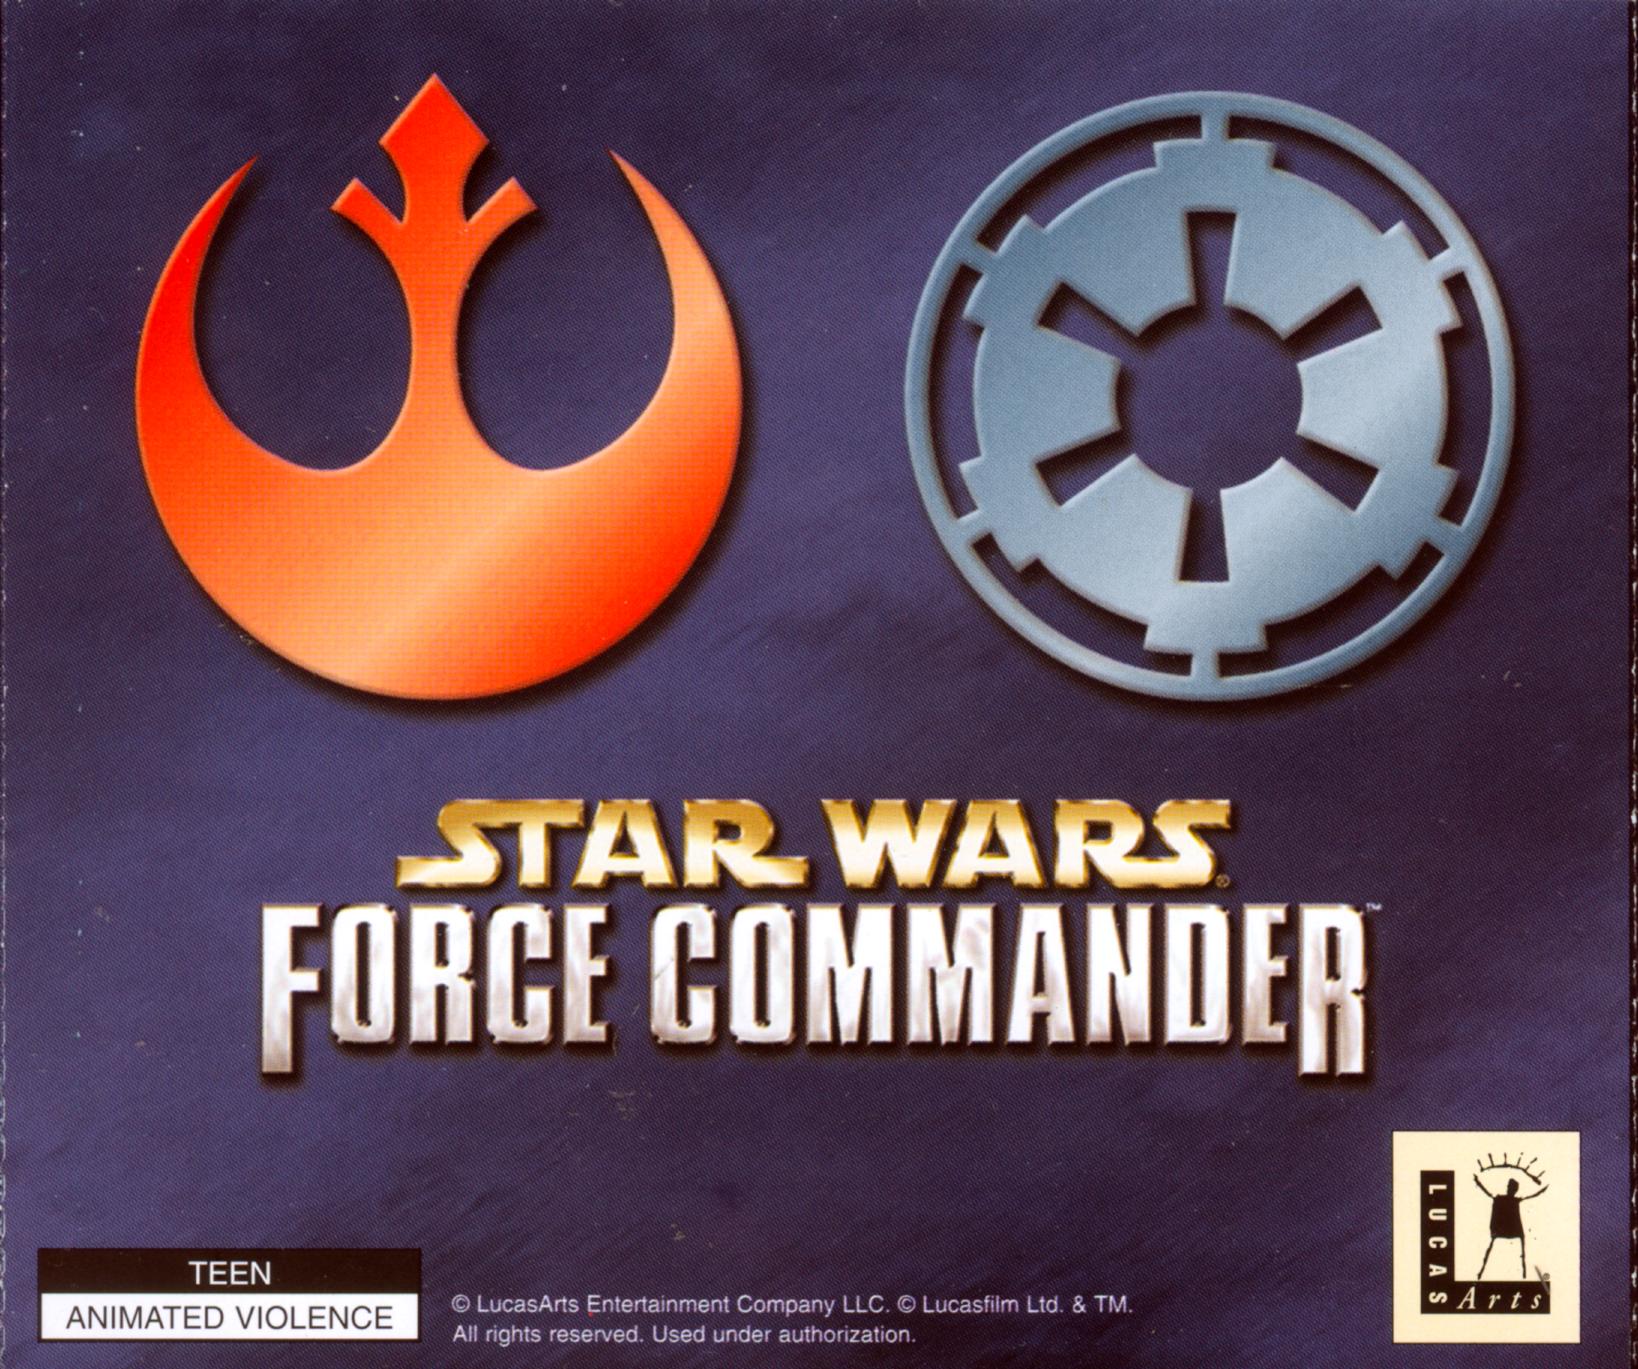 Commanding force. Star Wars Force Commander. Force Commander logo. Star Wars Force Commander logo. Star Wars Force Commander Audio file.